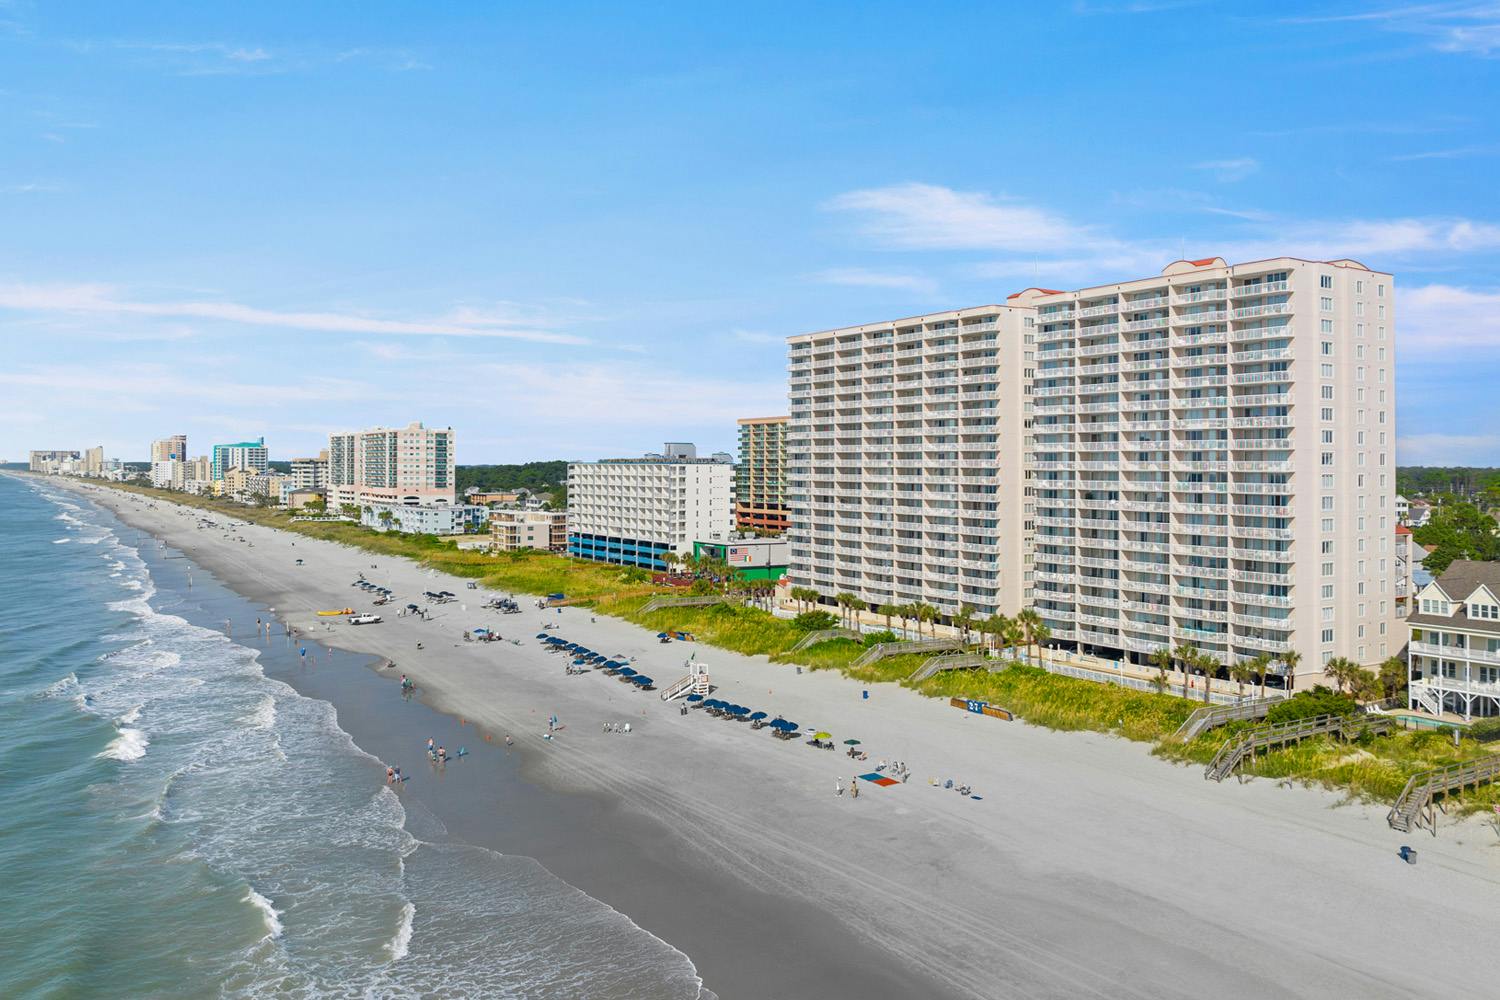 Myrtle Beach Vacation Rentals, Condominiums and More